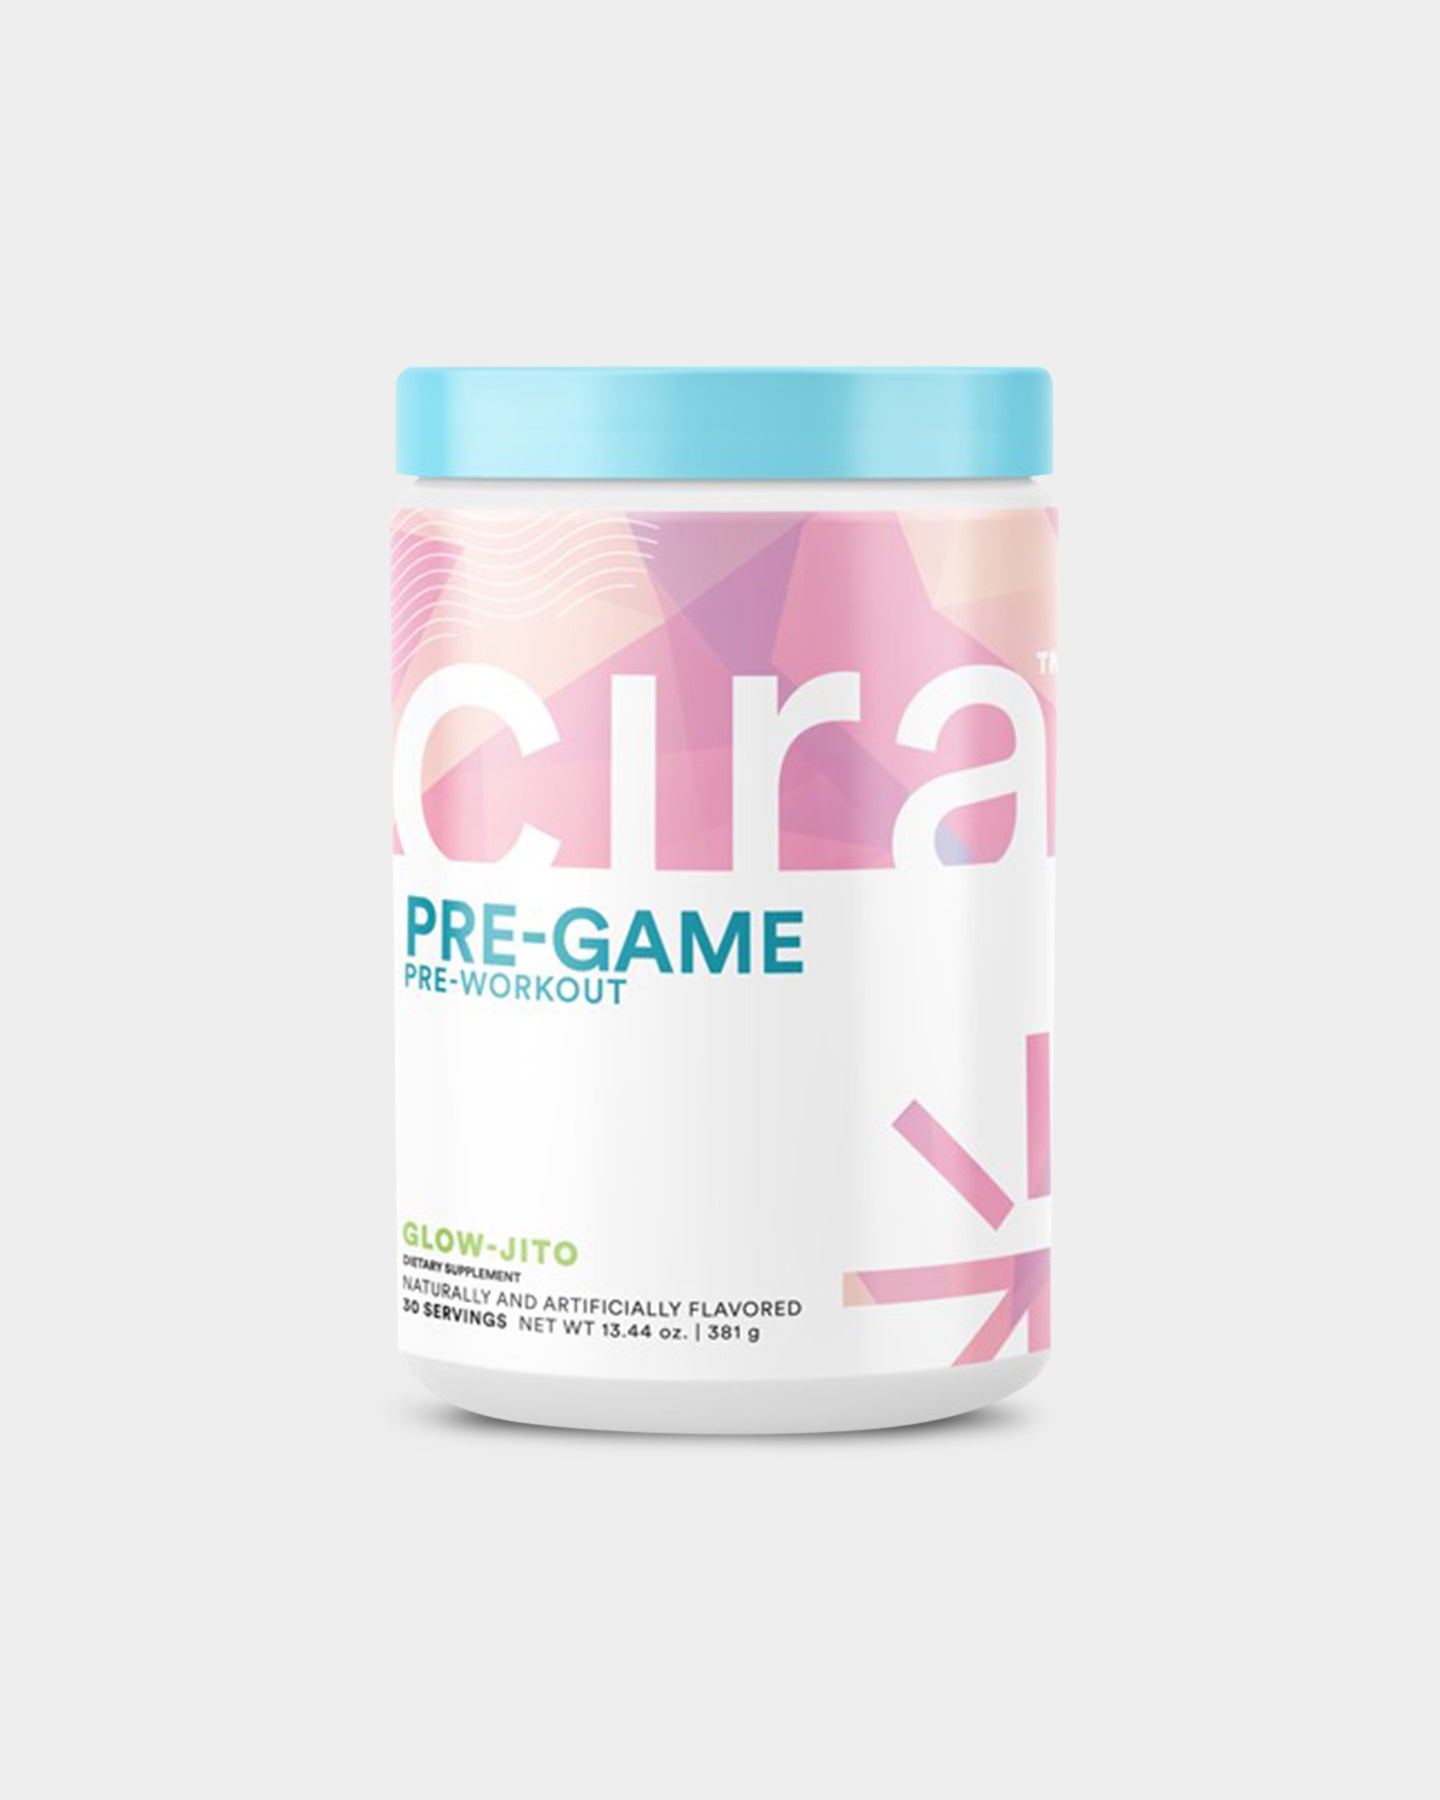 Cira Nutrition Pre-Game, Glow-jito, 30 Servings